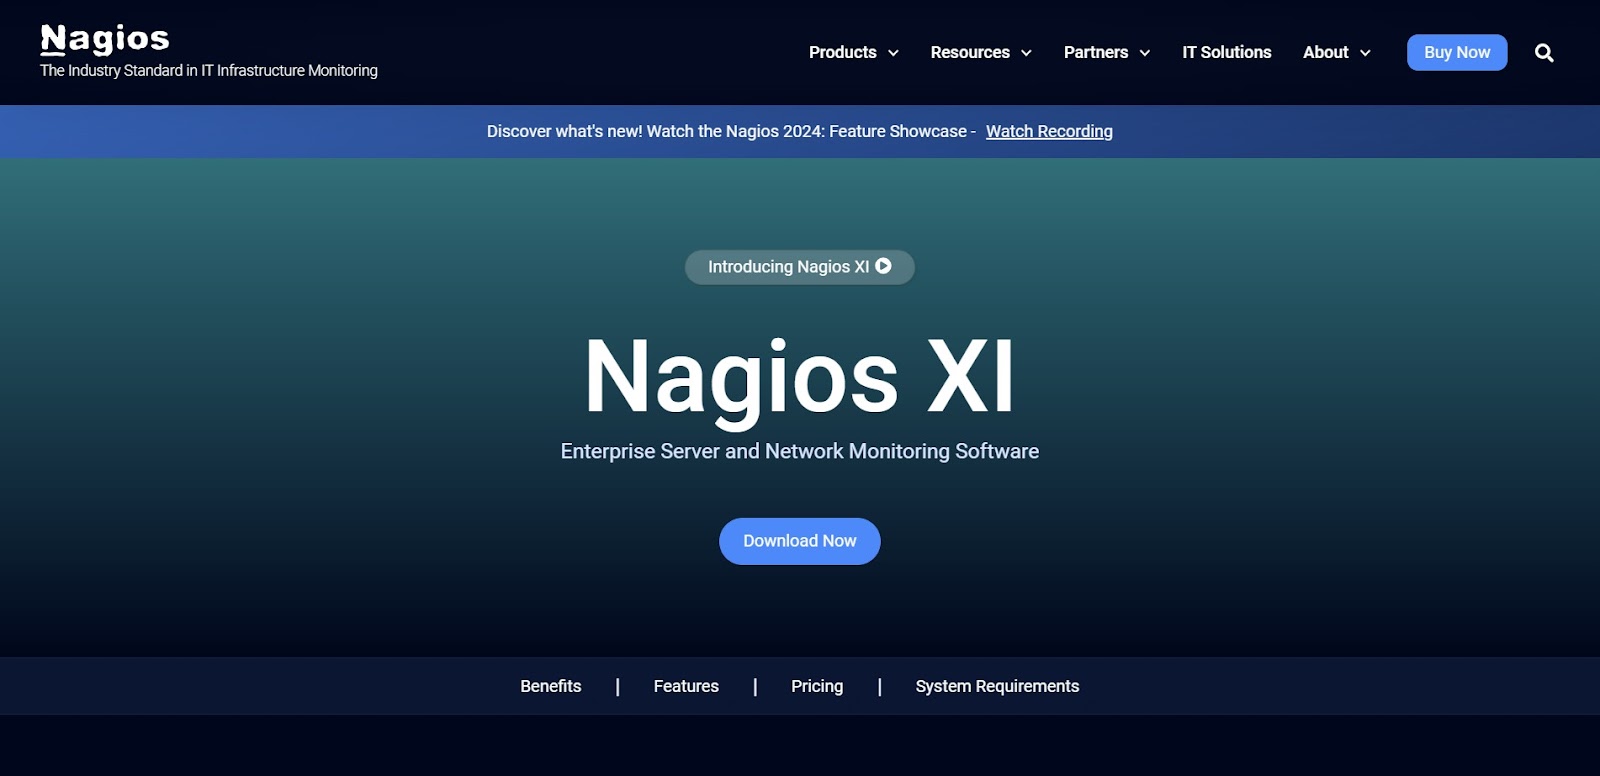 A screenshot of Nagios XI's website